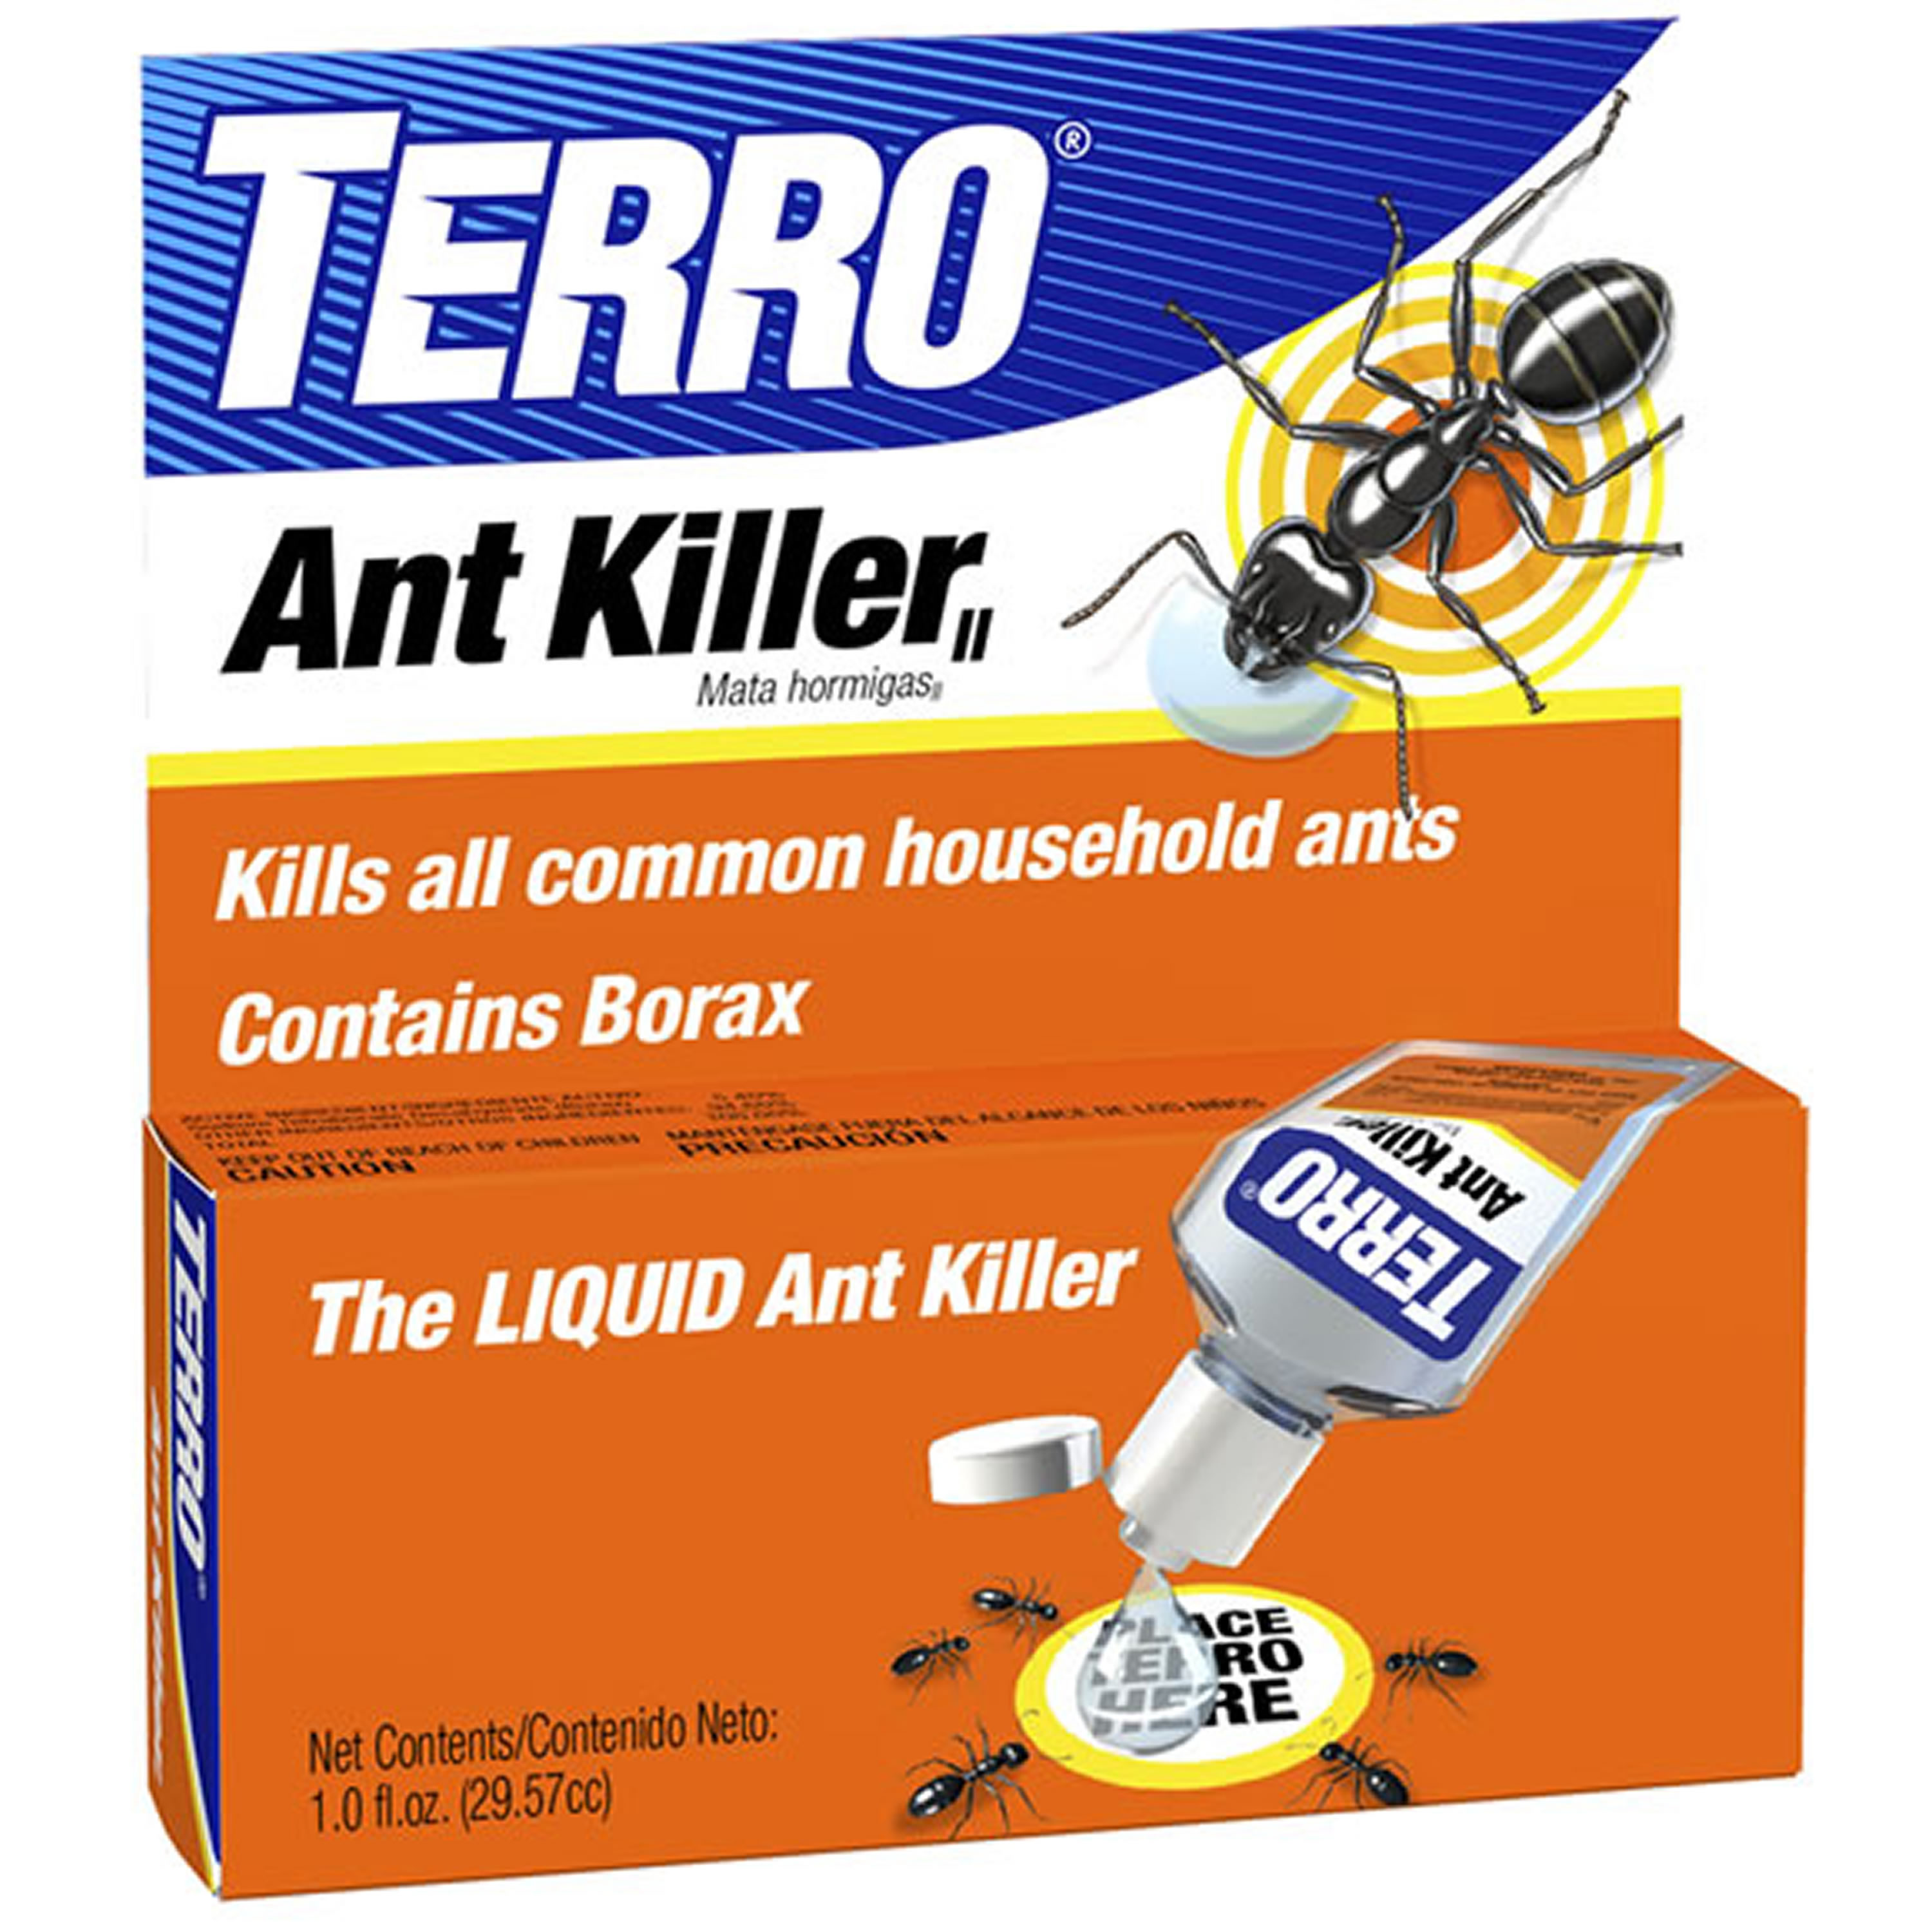 TERRO 3-oz Roach Killer in the Pesticides department at